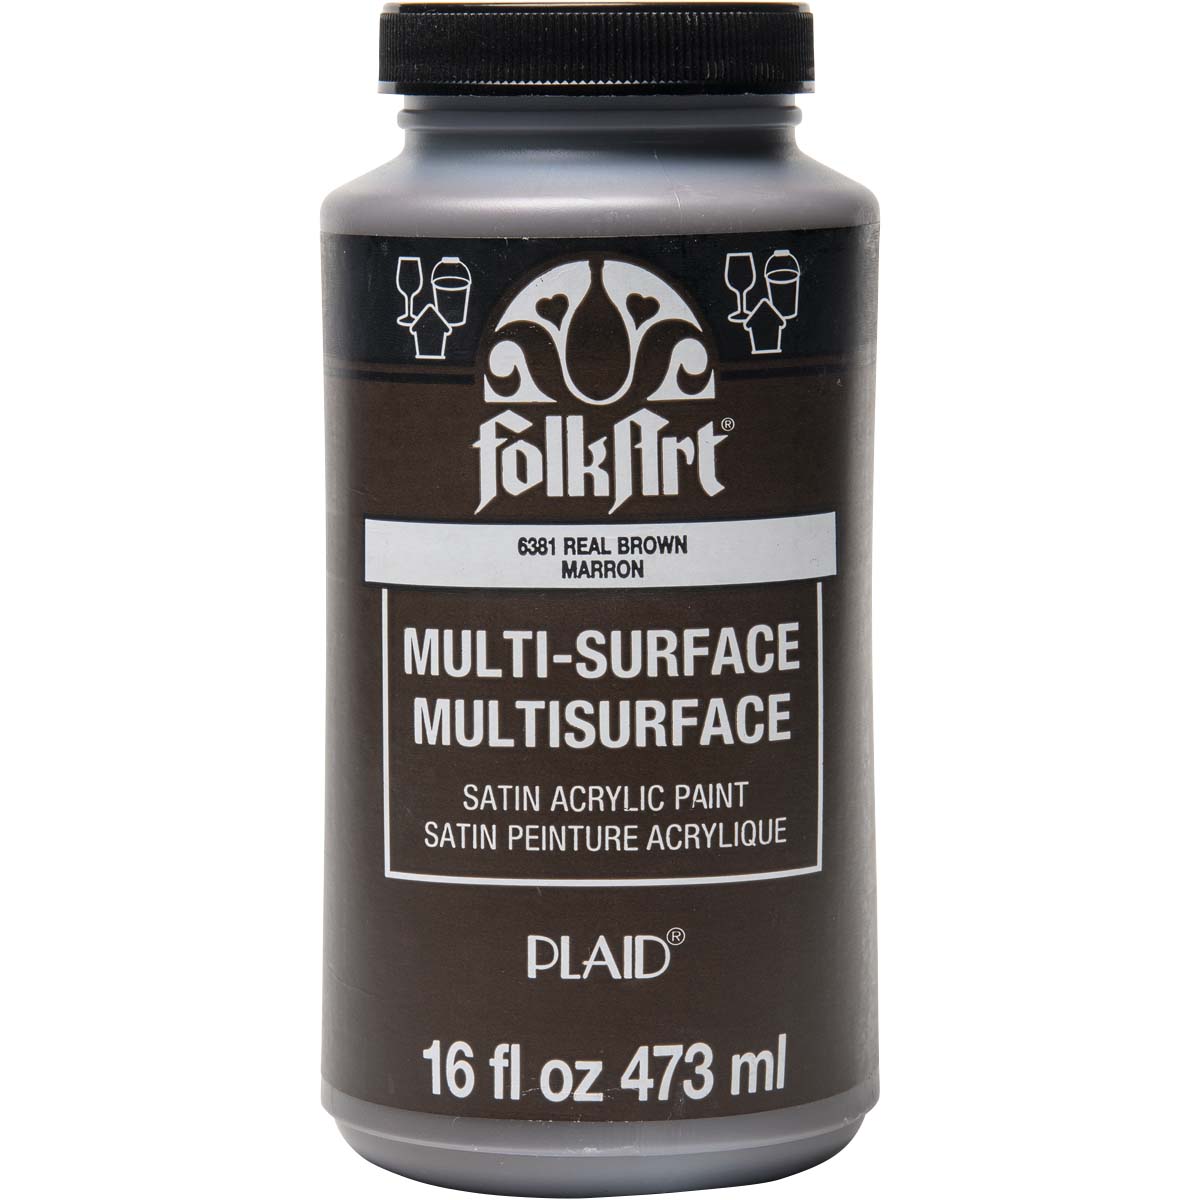 FolkArt ® Multi-Surface Satin Acrylic Paints - Real Brown, 16 oz. - 6381